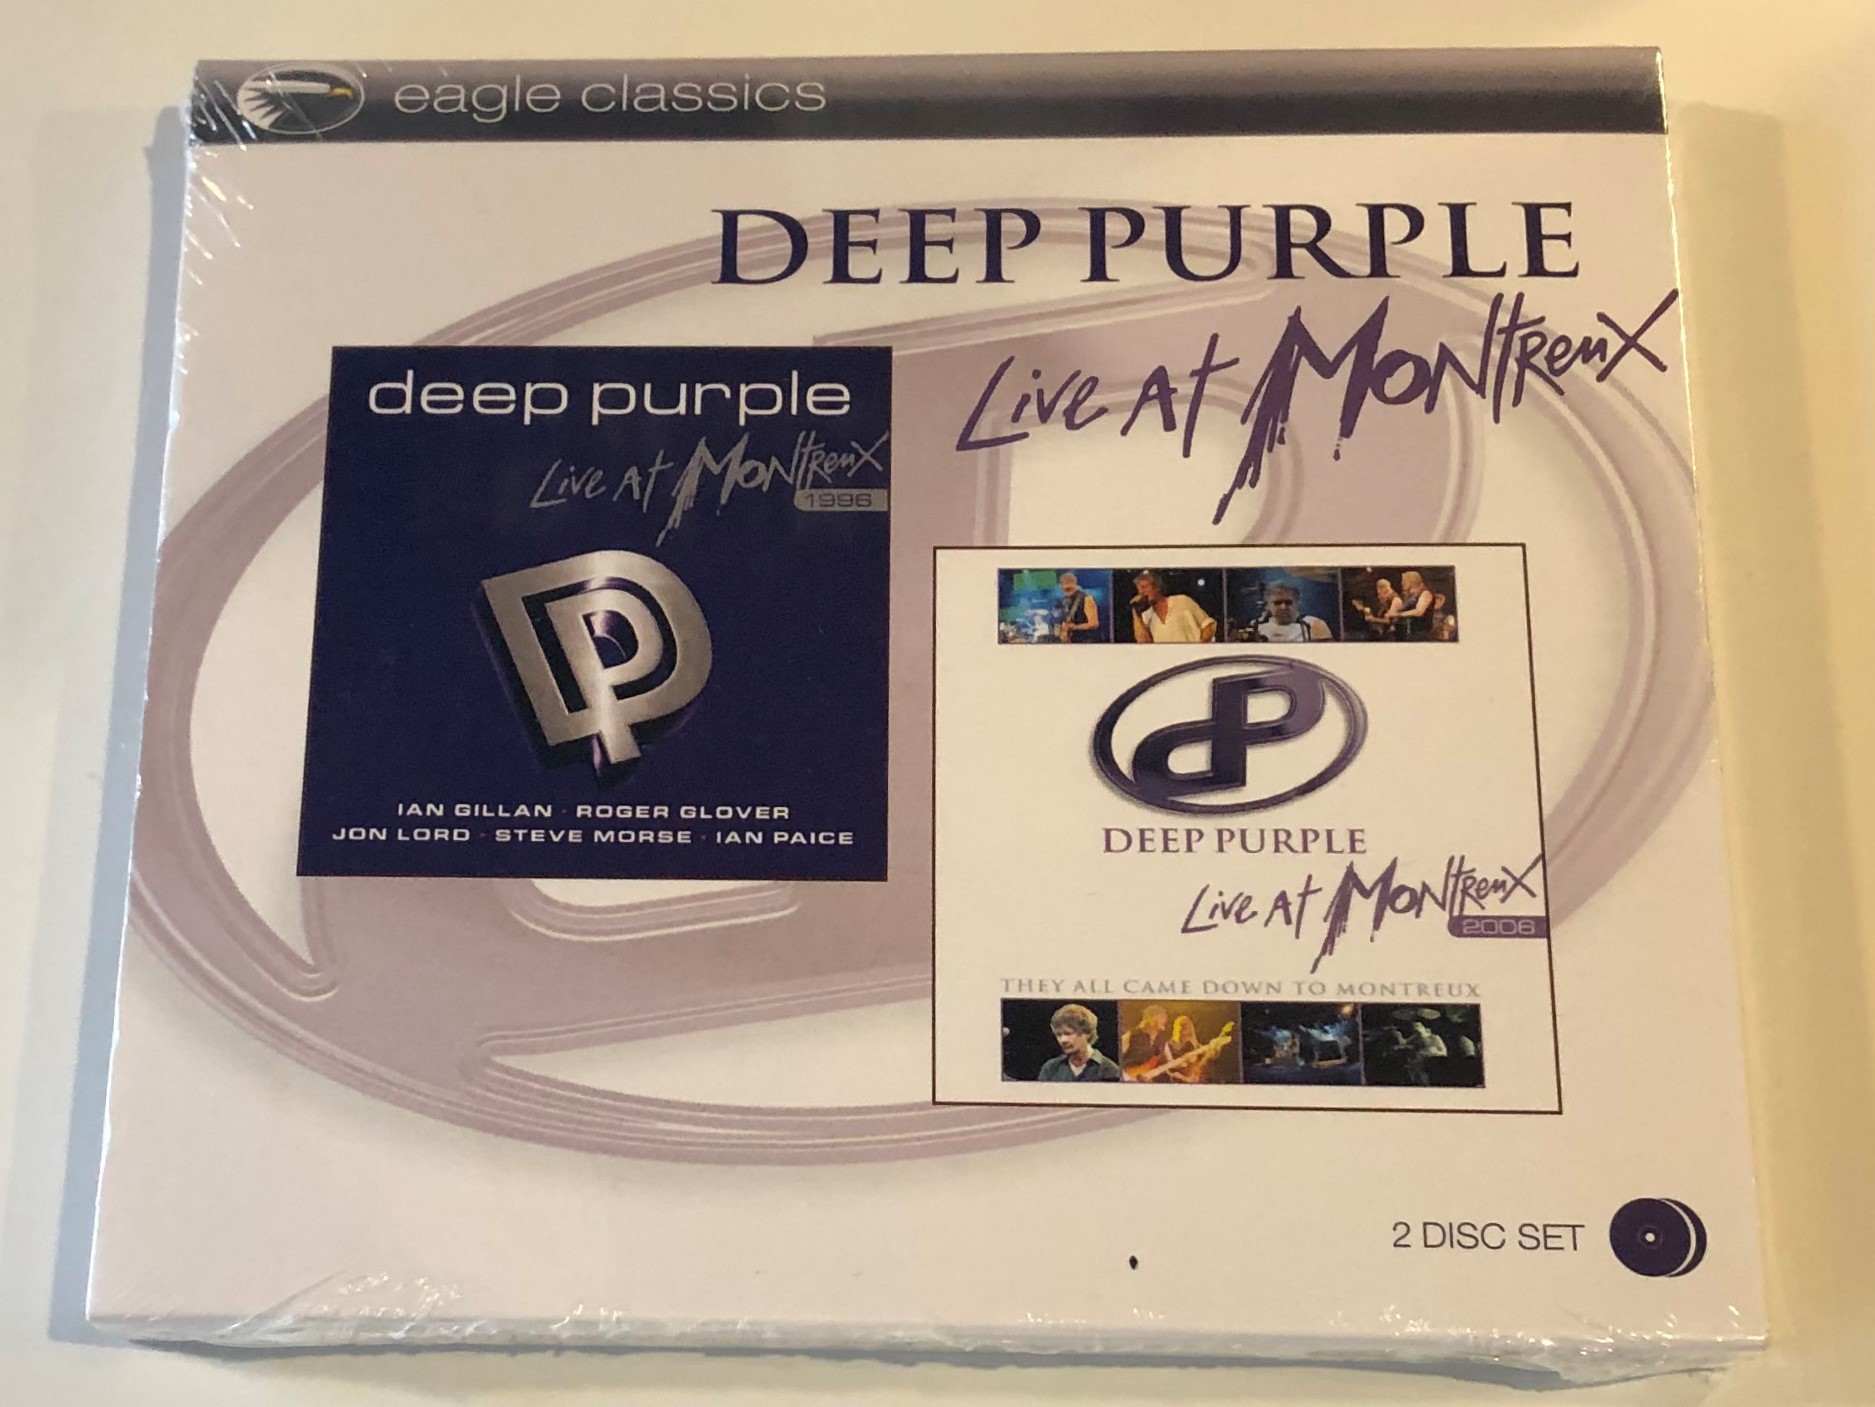 deep-purple-live-at-montreux-1996-2006-eagle-classics-eagle-records-2x-audio-cd-set-2013-edgcd513-1-.jpg